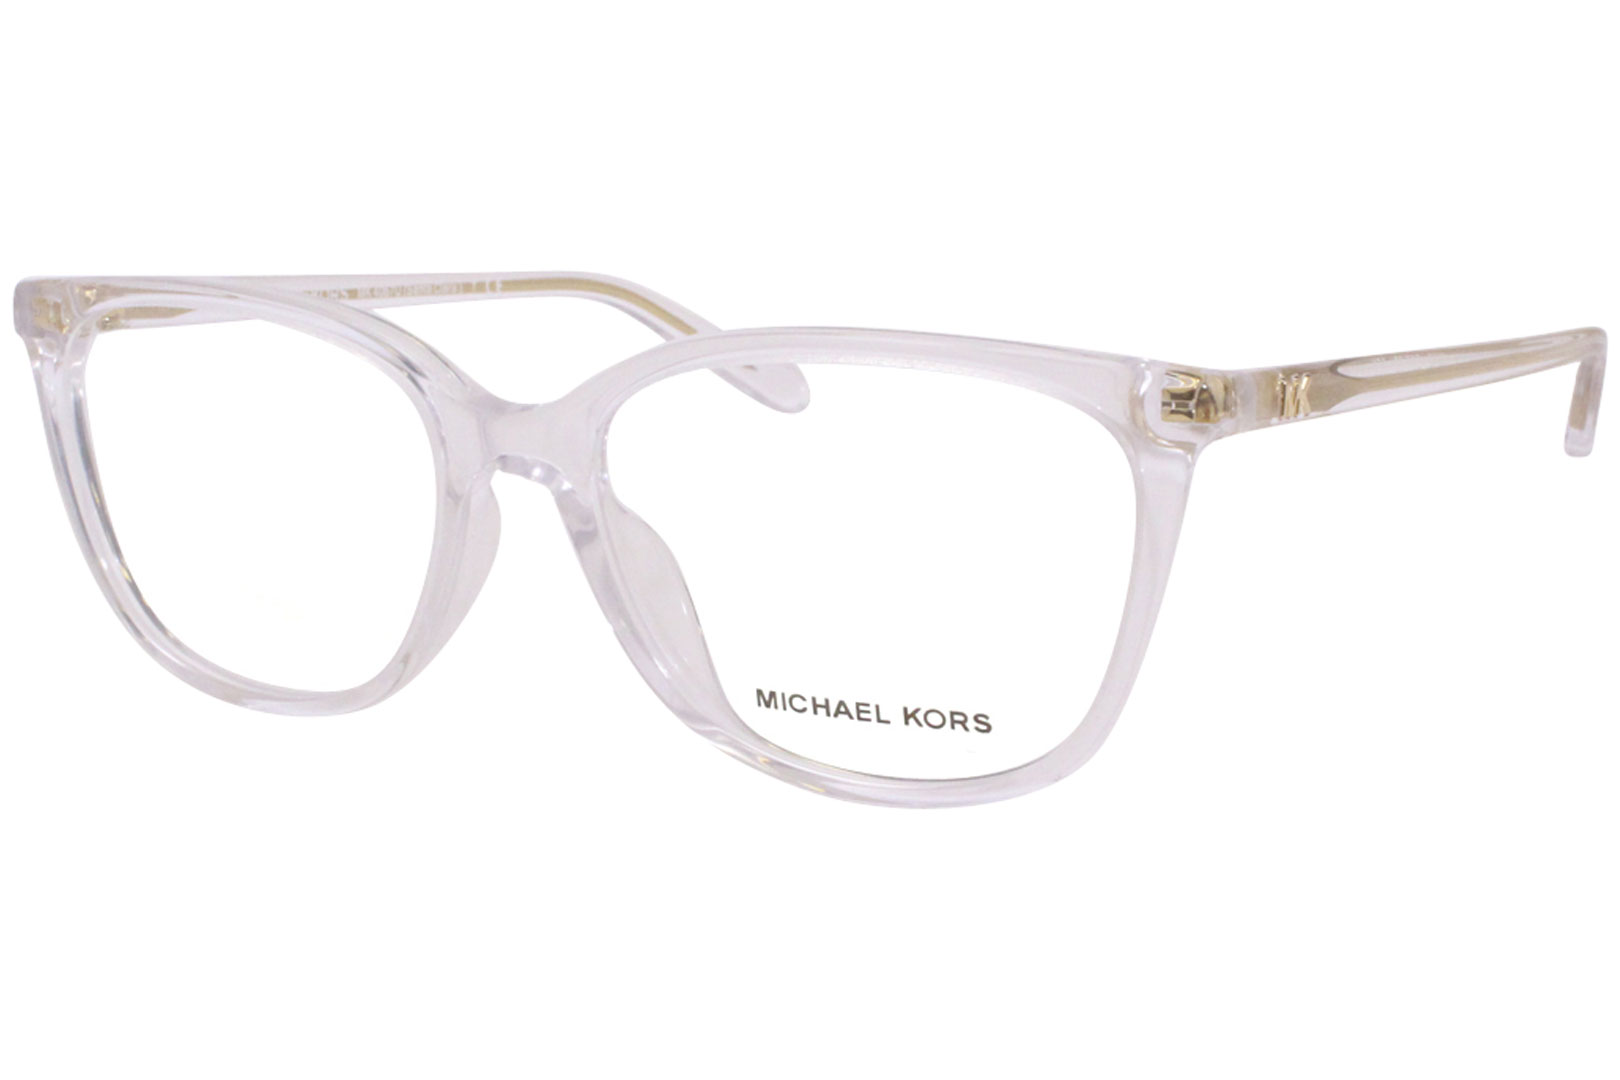 Actualizar 86+ imagen michael kors eyeglass frames clear - Thptnganamst ...